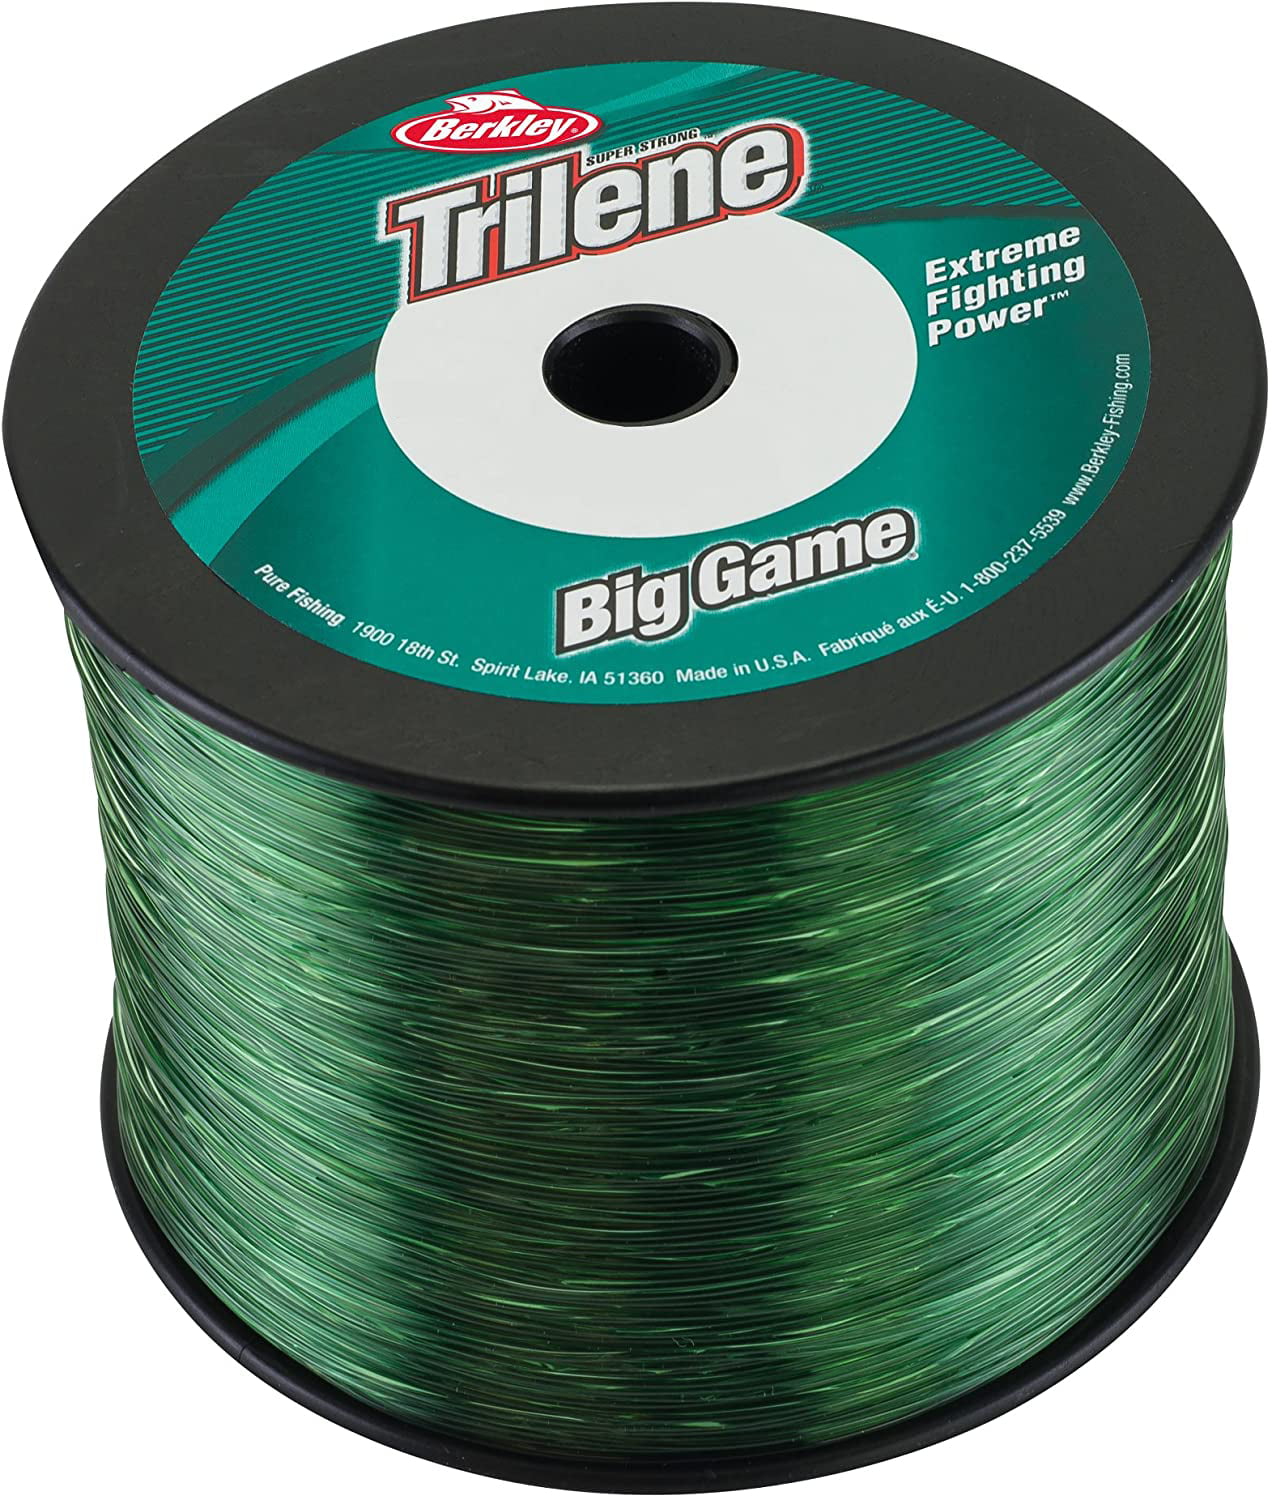 Berkley Trilene Big Game, Green, 12lb 5.4kg Monofilament Fishing Line 